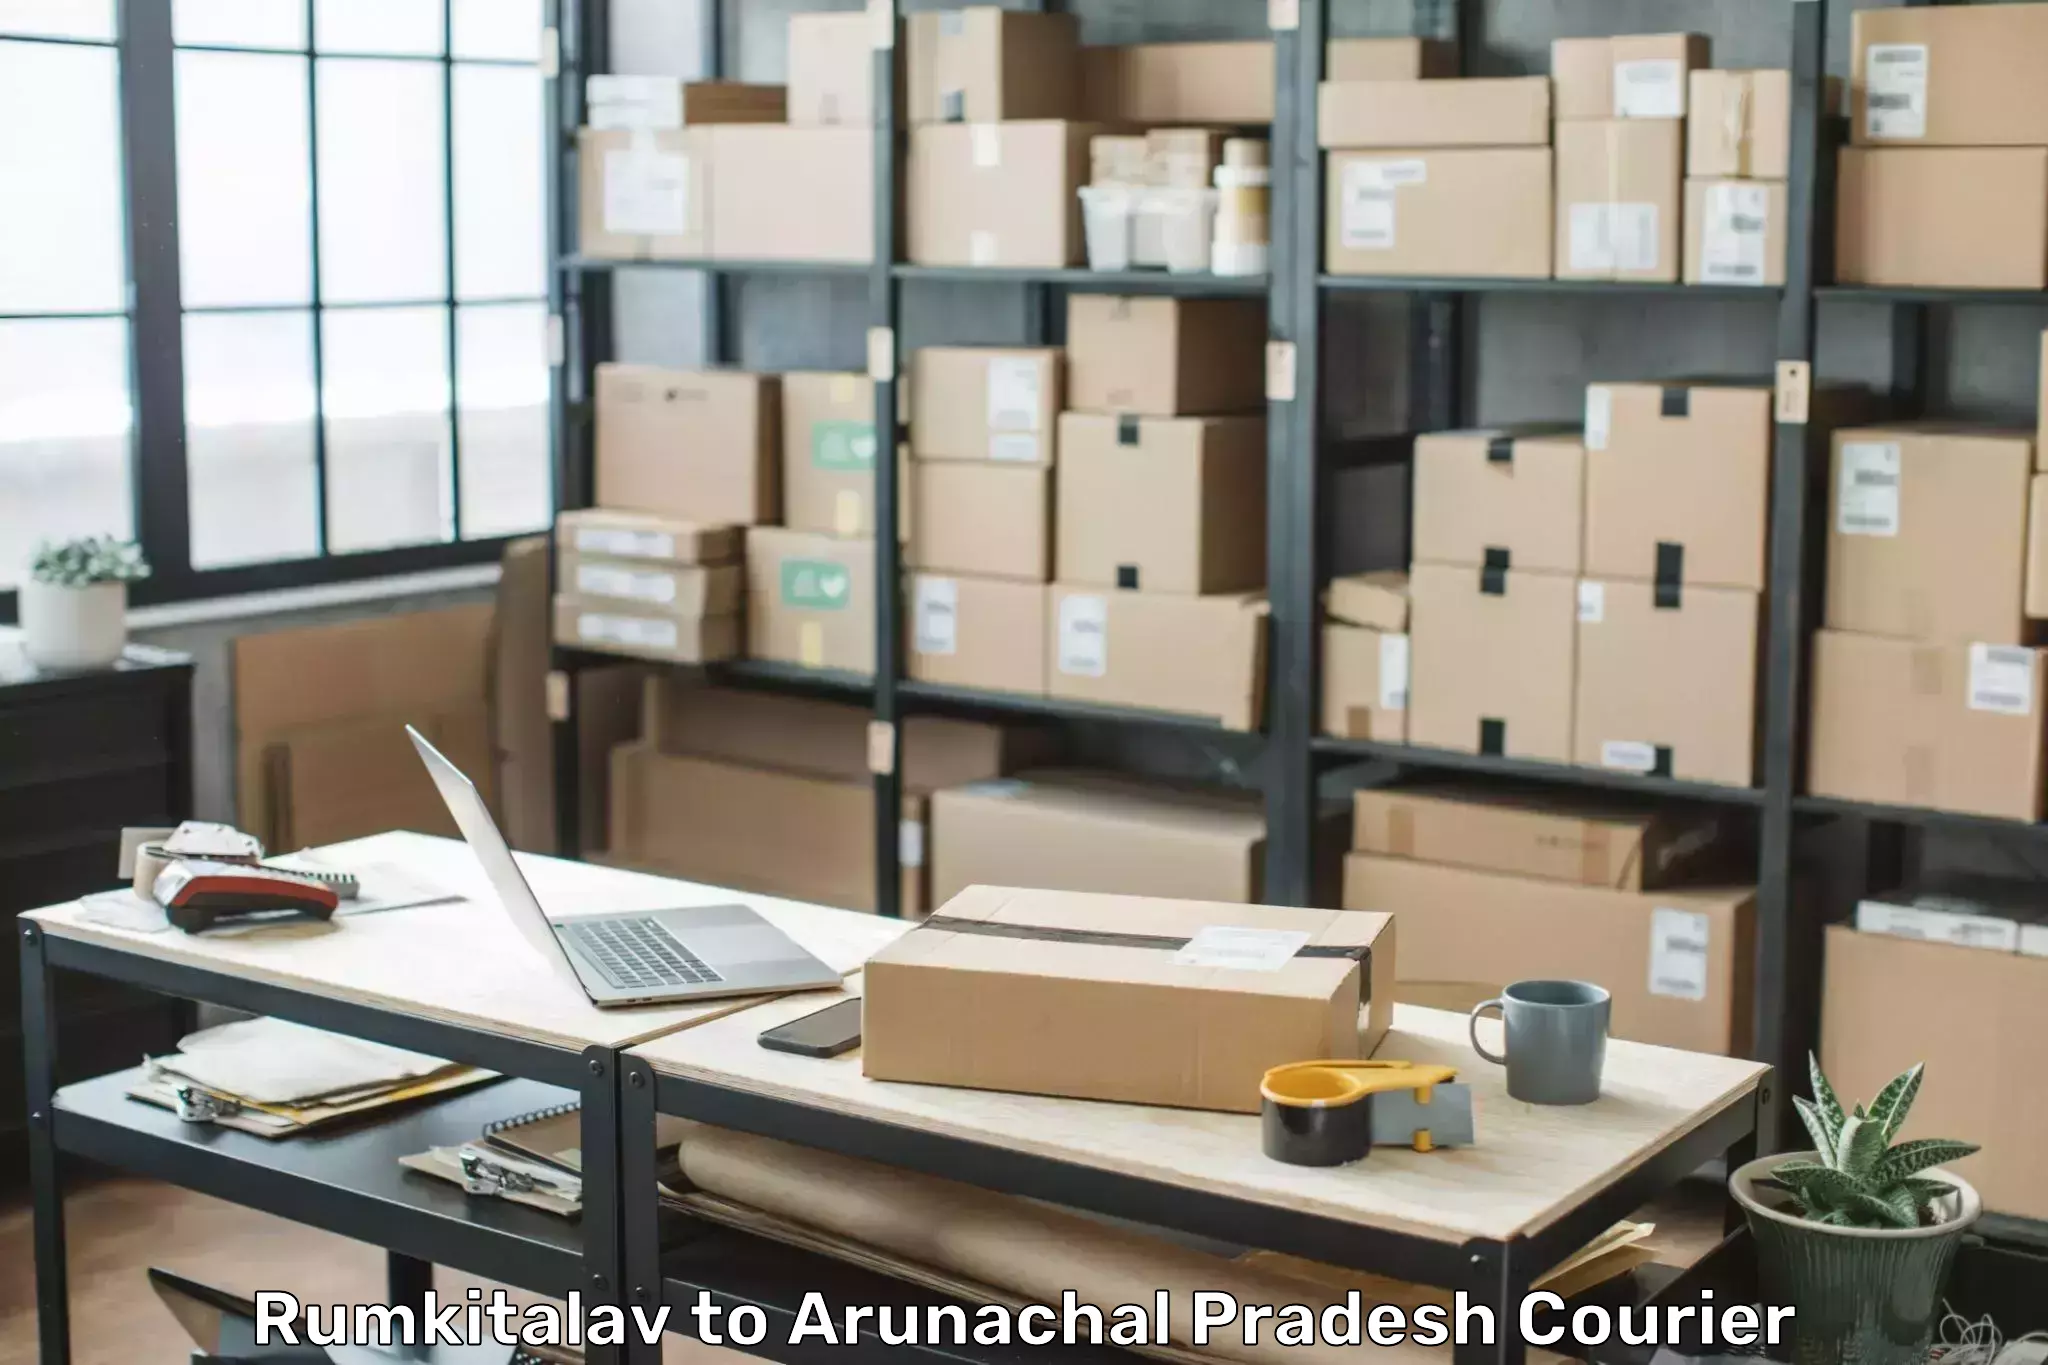 Baggage delivery technology Rumkitalav to Arunachal Pradesh